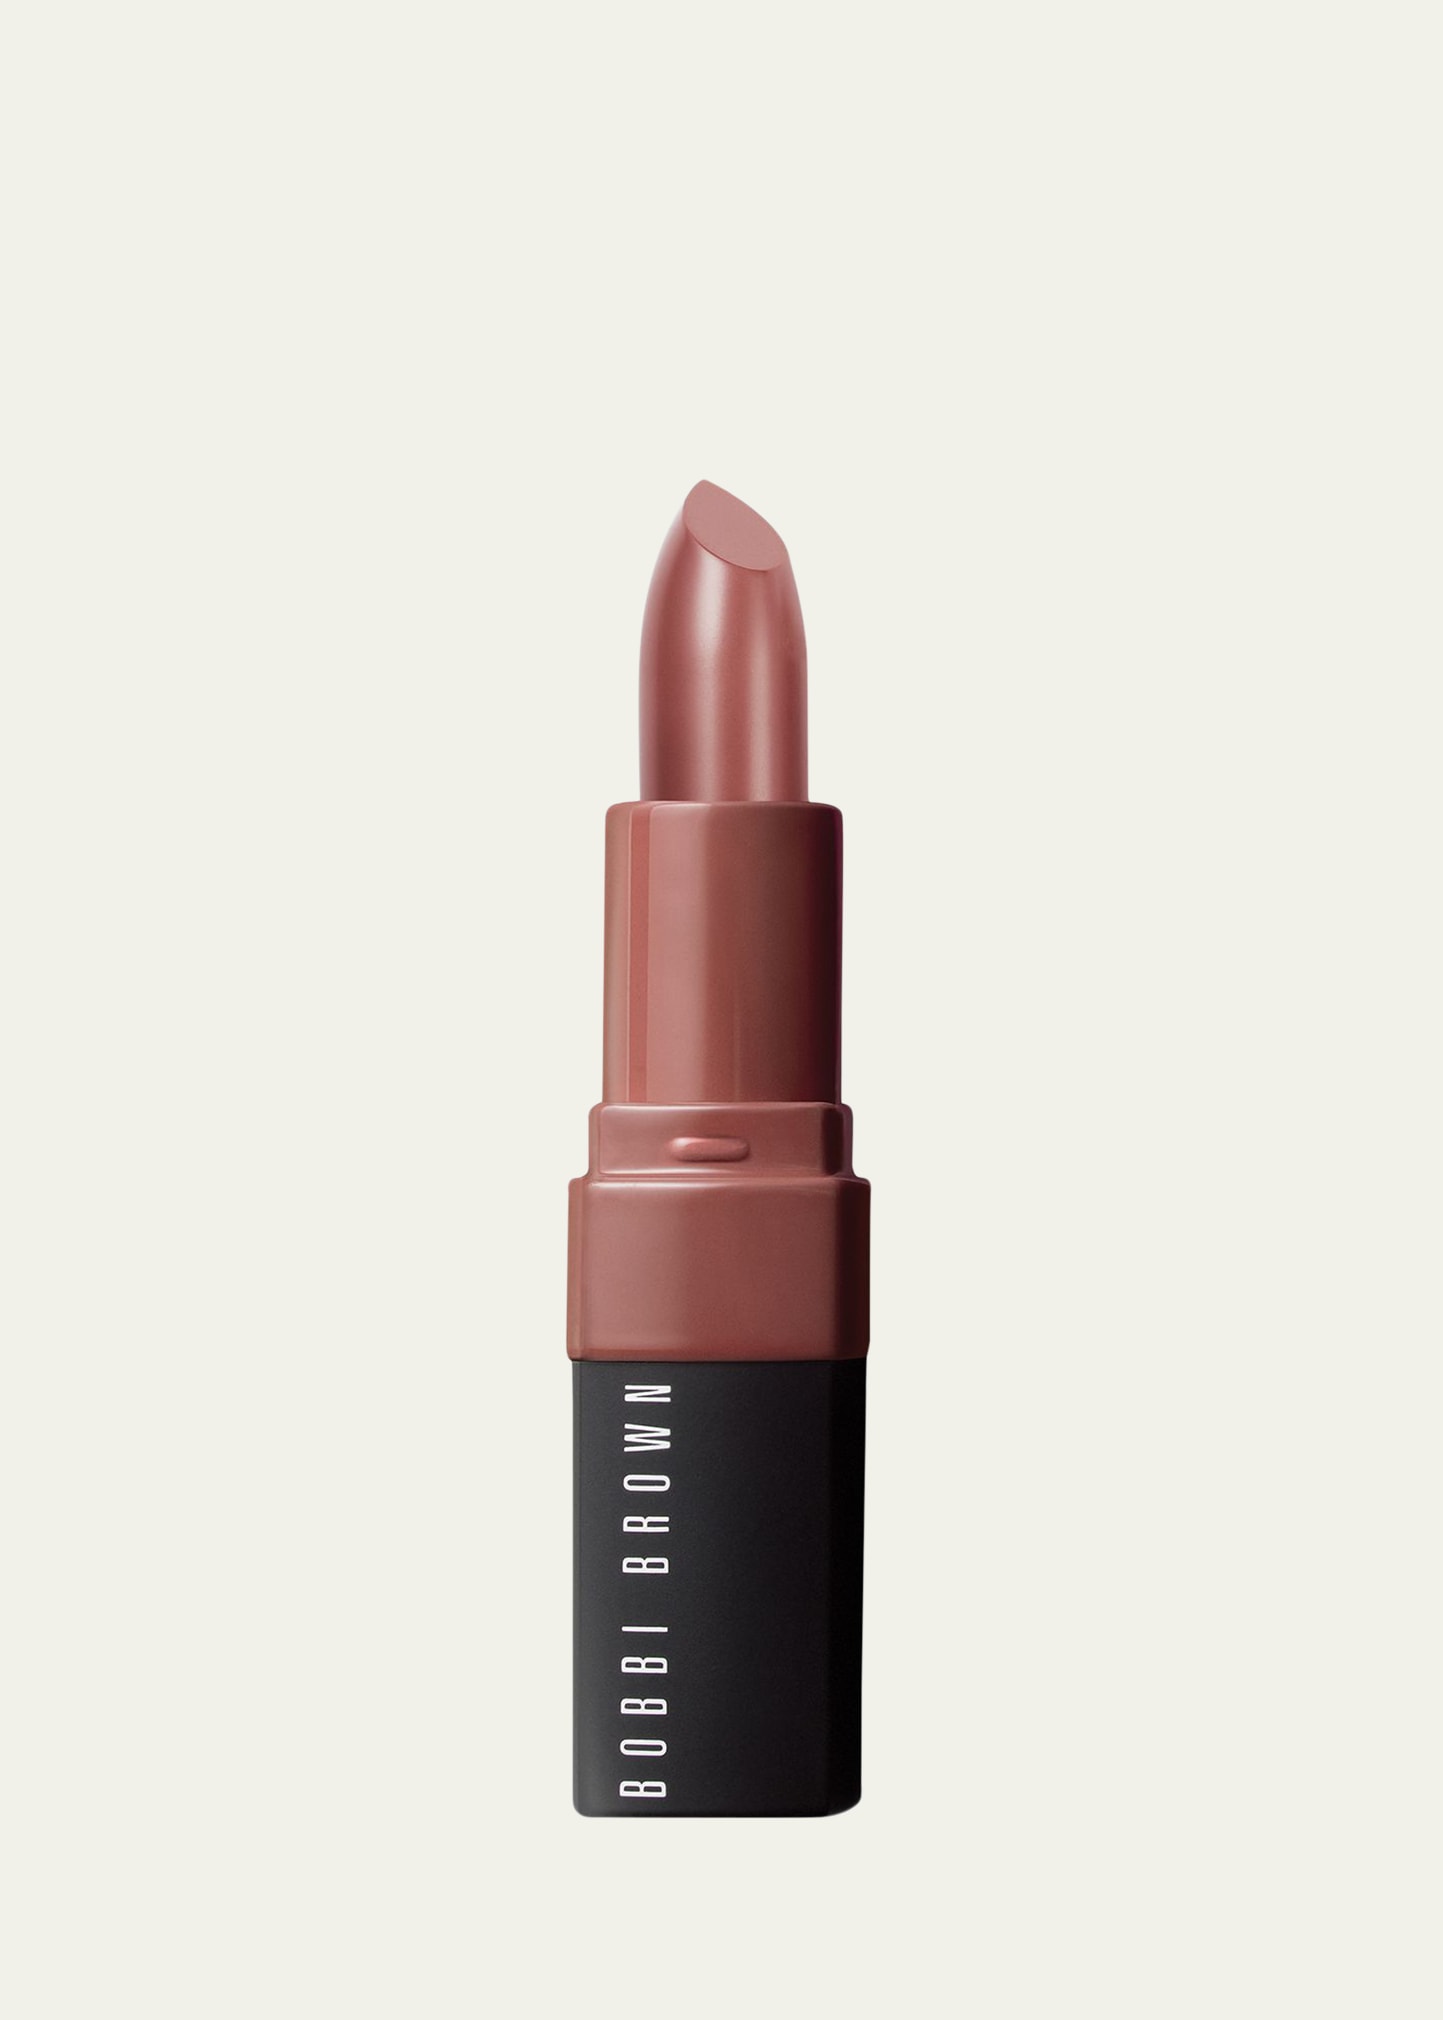 Bobbi Brown Crushed Lip Color Lipstick In Sazan Nude